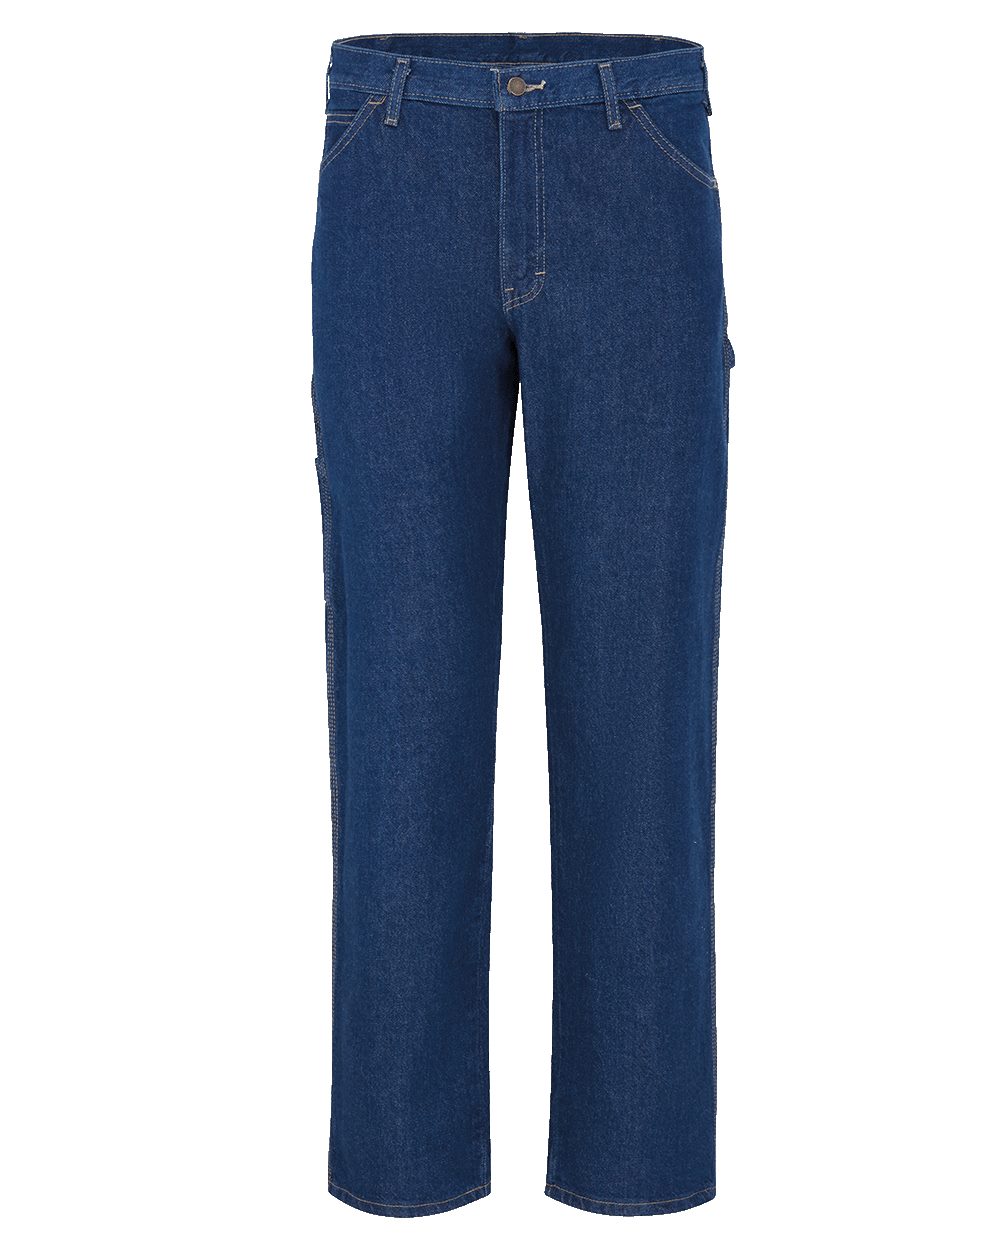 Dickies LU20 - Industrial Carpenter Jeans